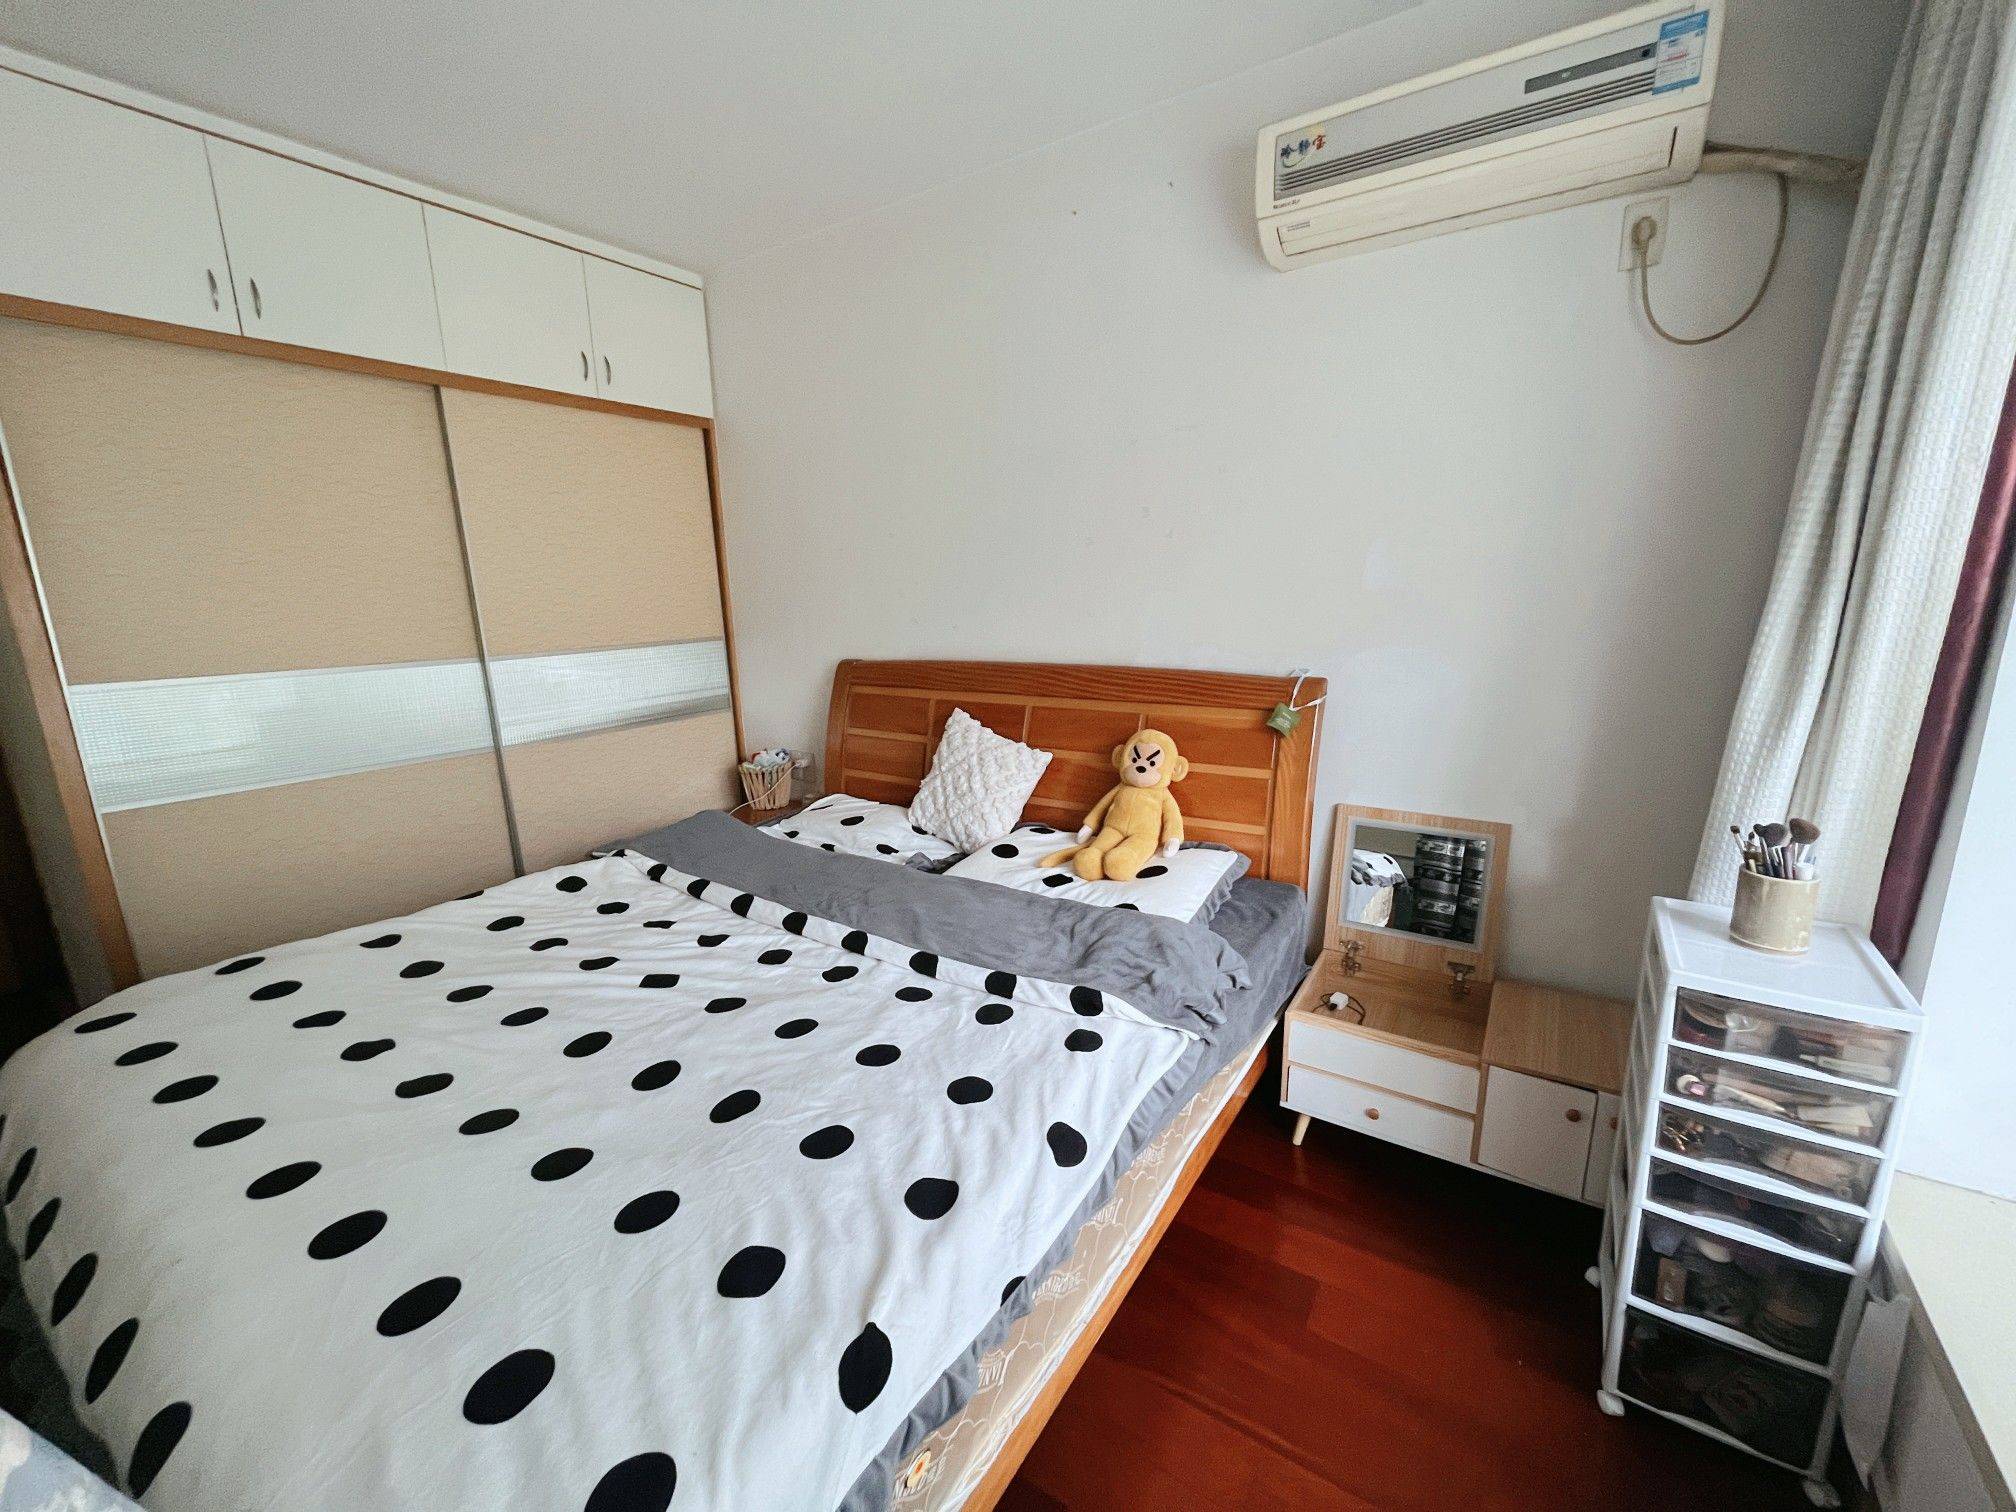 Hangzhou-Yuhang-Cozy Home,Clean&Comfy,No Gender Limit